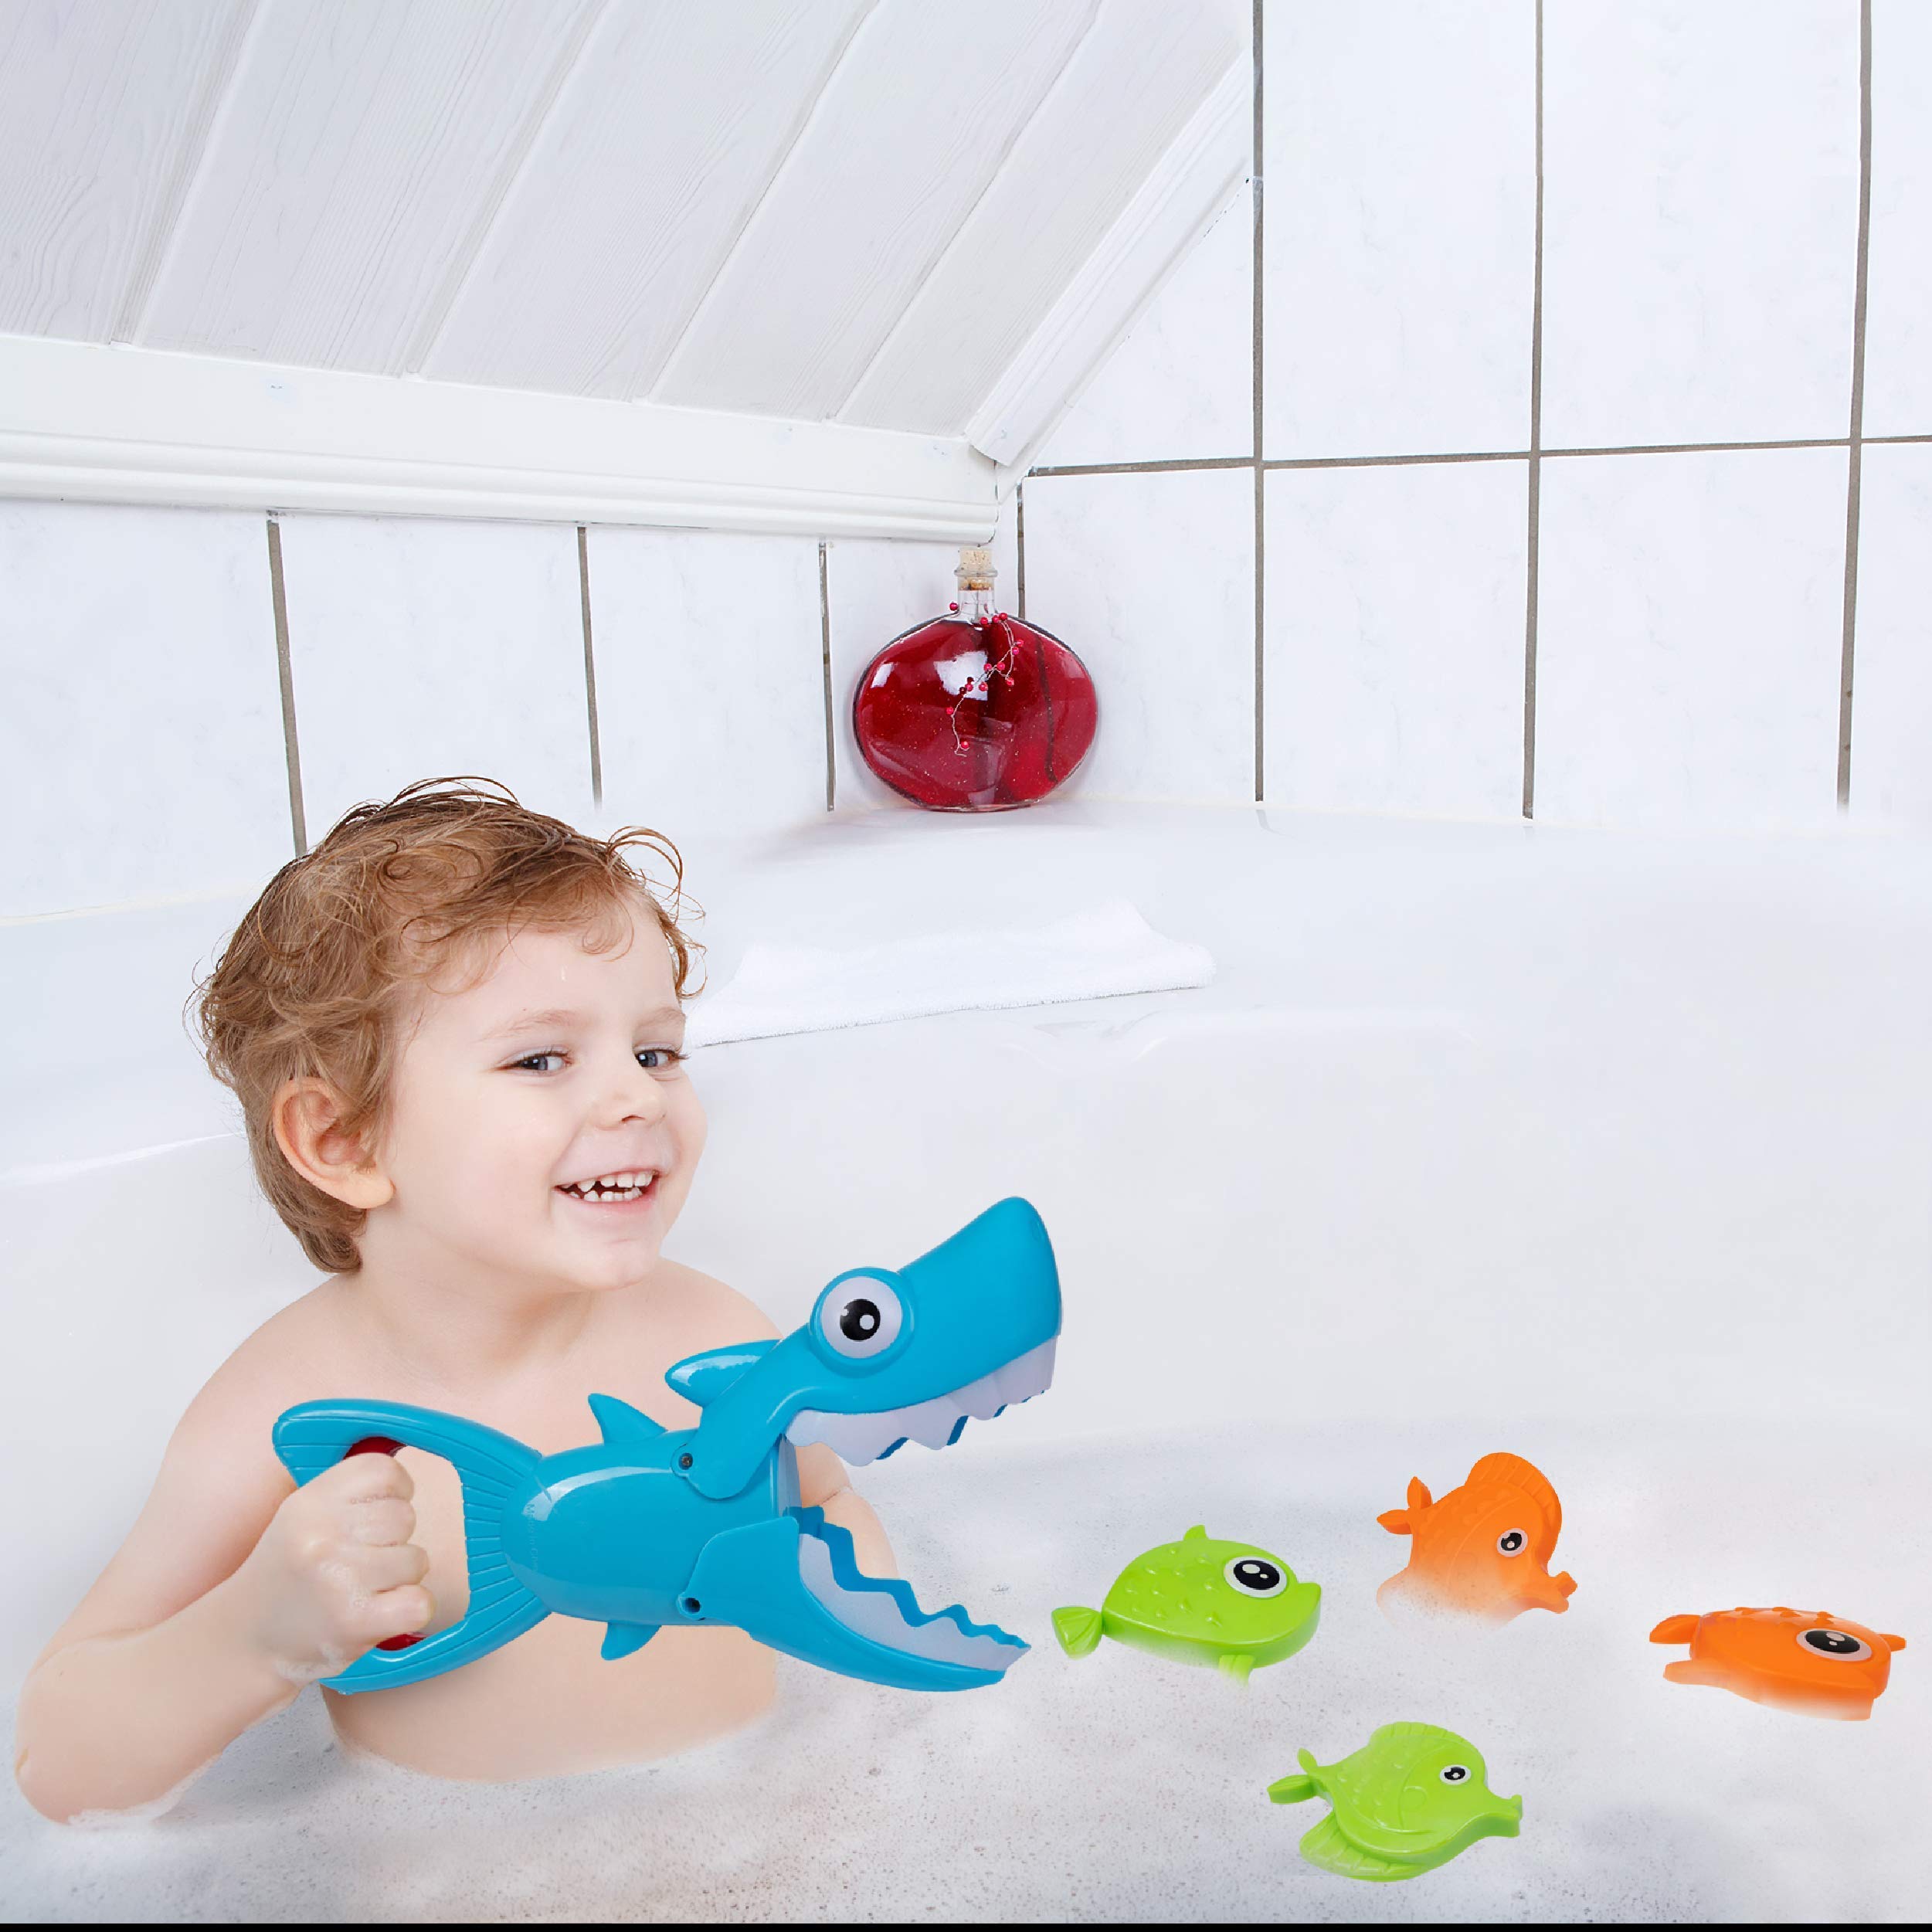 Hoovy Bath Toys Fun Baby Bathtub Toy Shark Bath Toy for Toddlers Boys & Girls Shark Grabber with 4 Toy Fish Included (Shark Grabber)